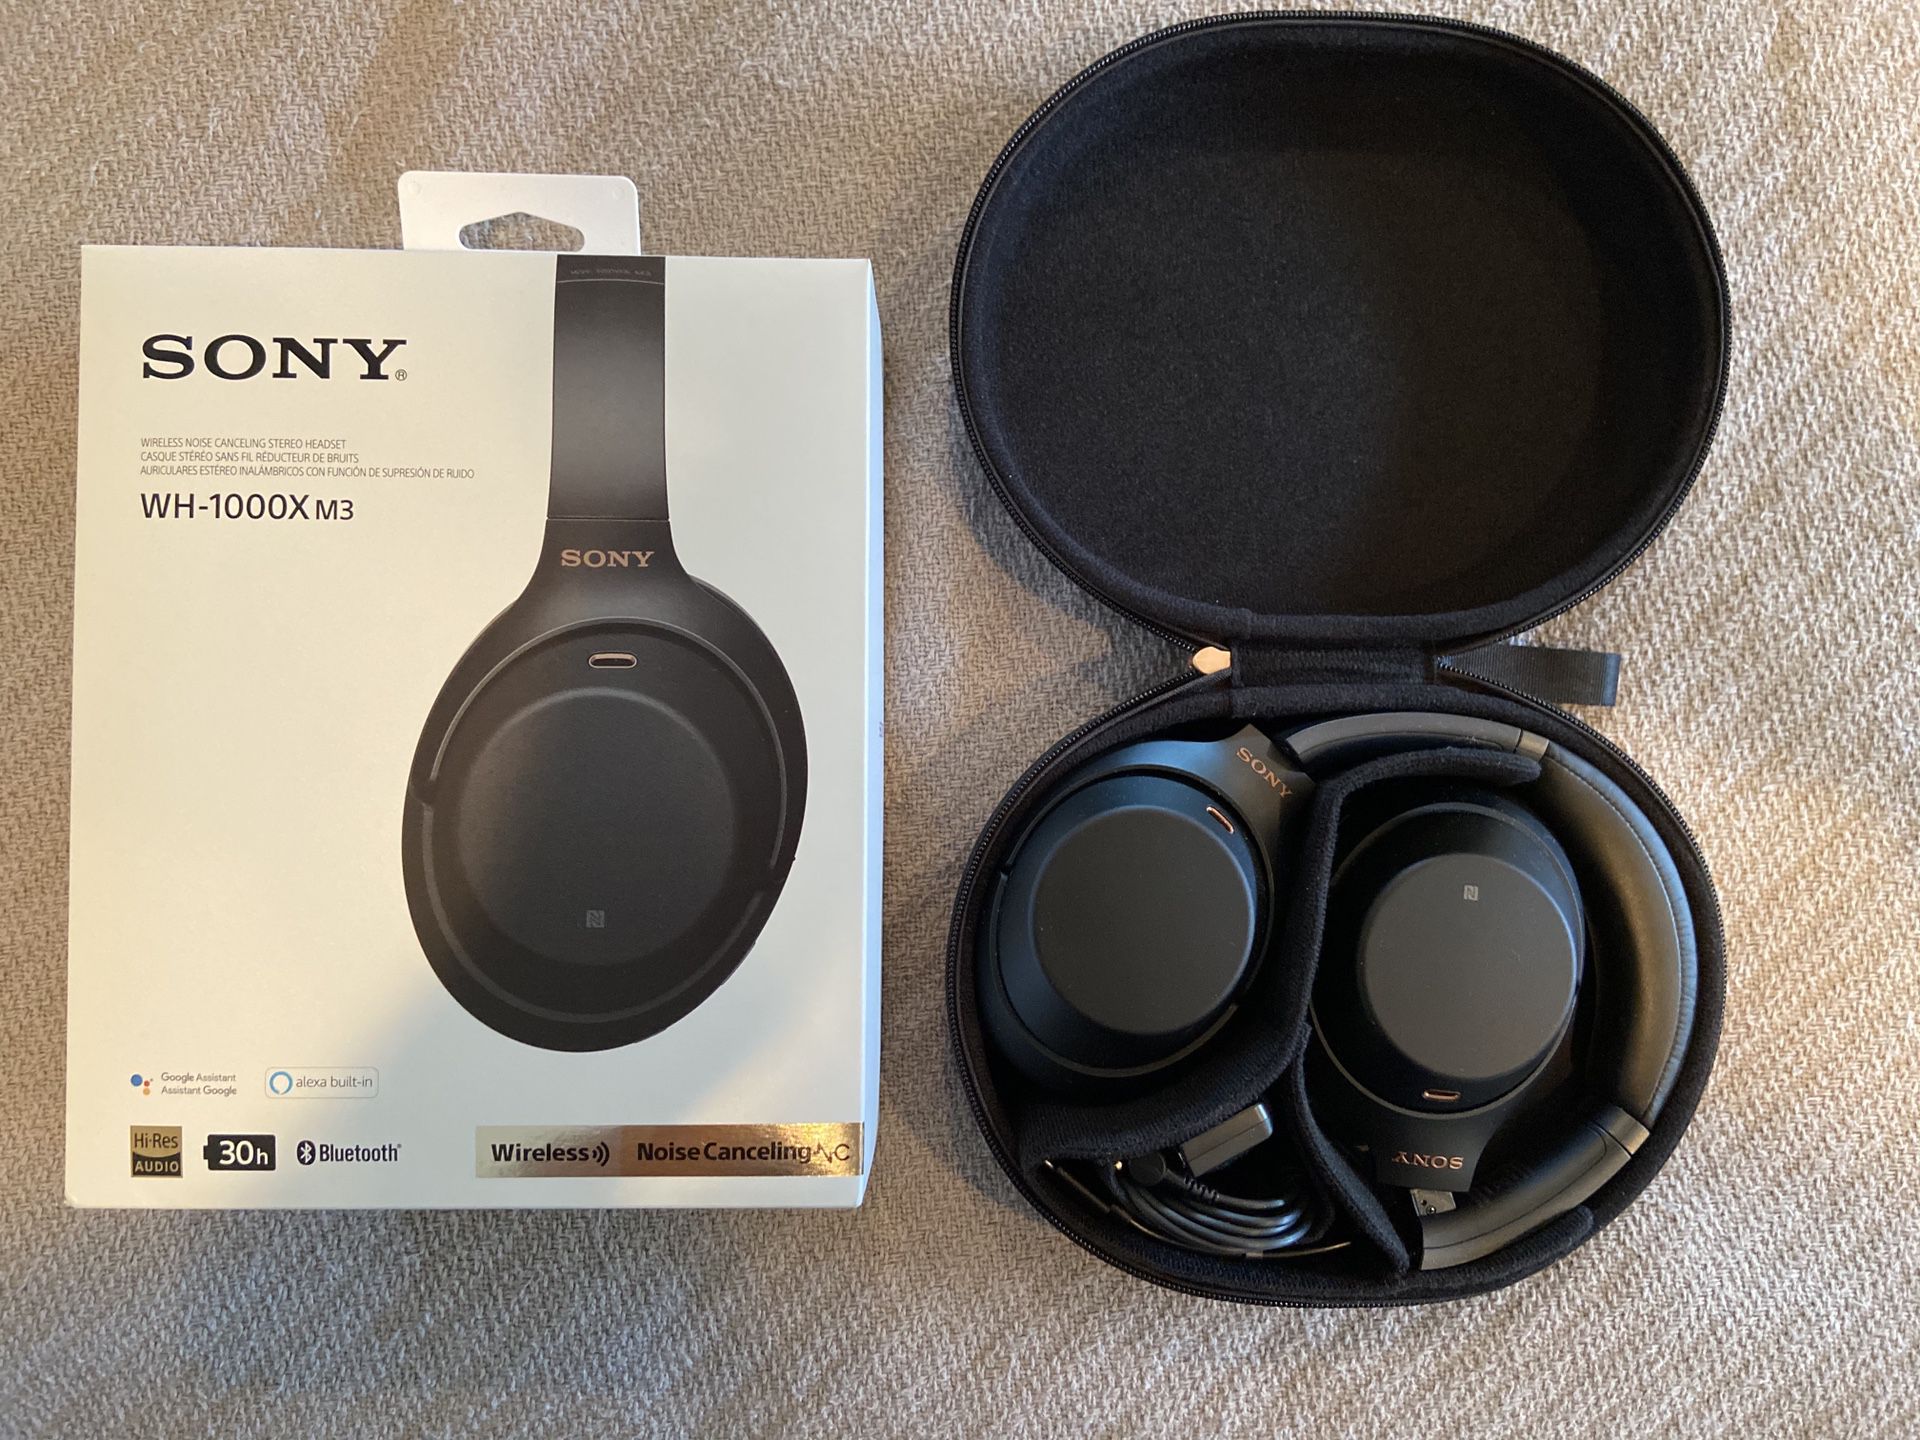 Sony WH-1000XM3 noise cancelling headphones